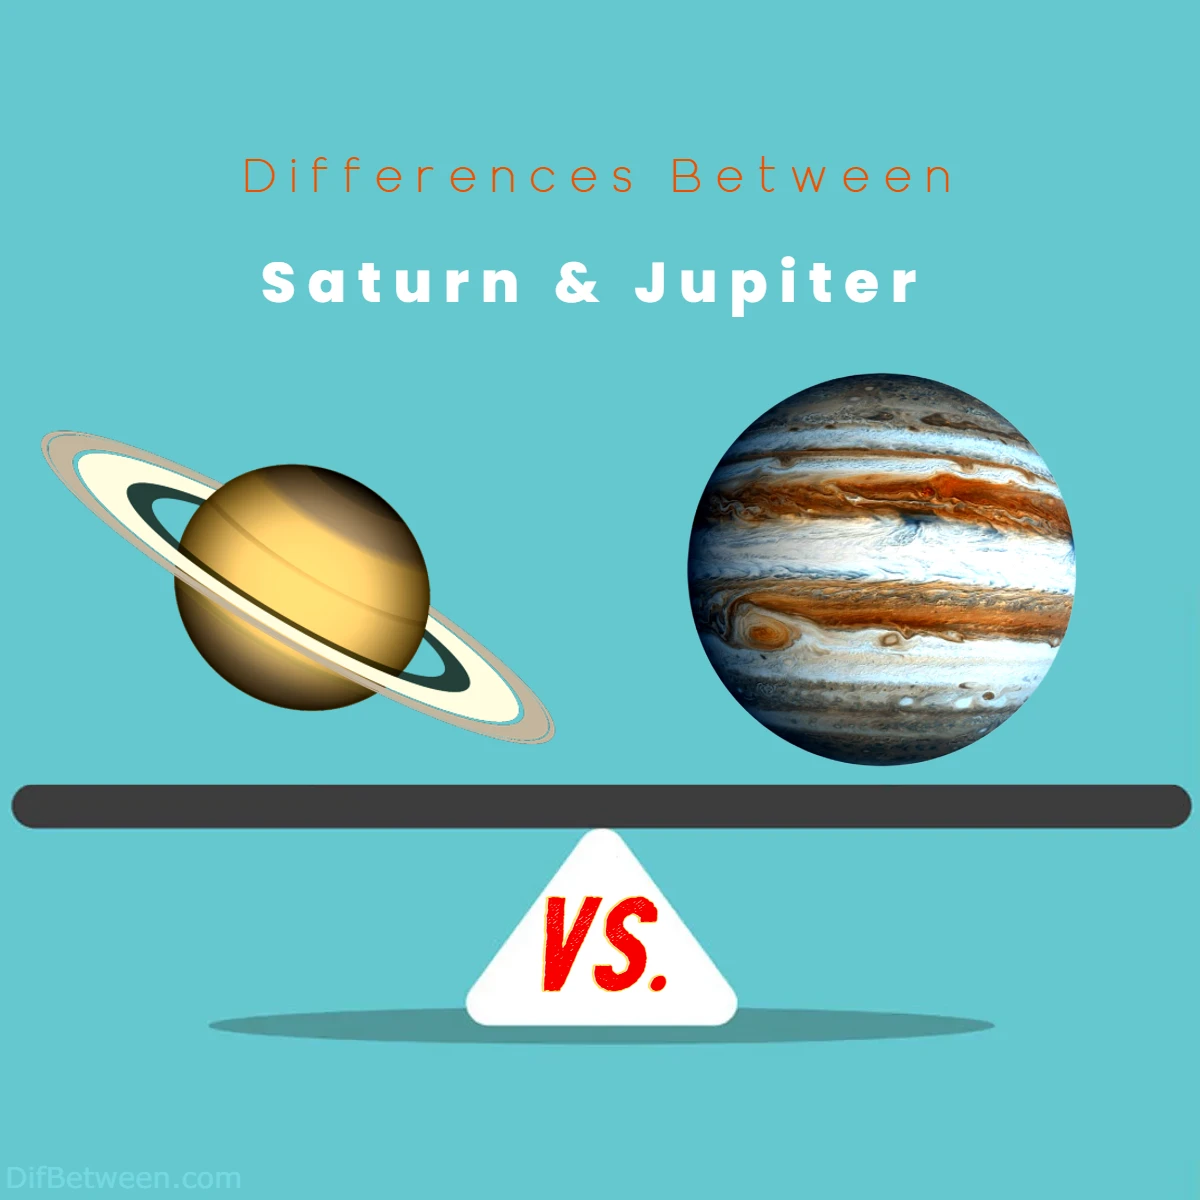 Differences Between Saturn vs Jupiter